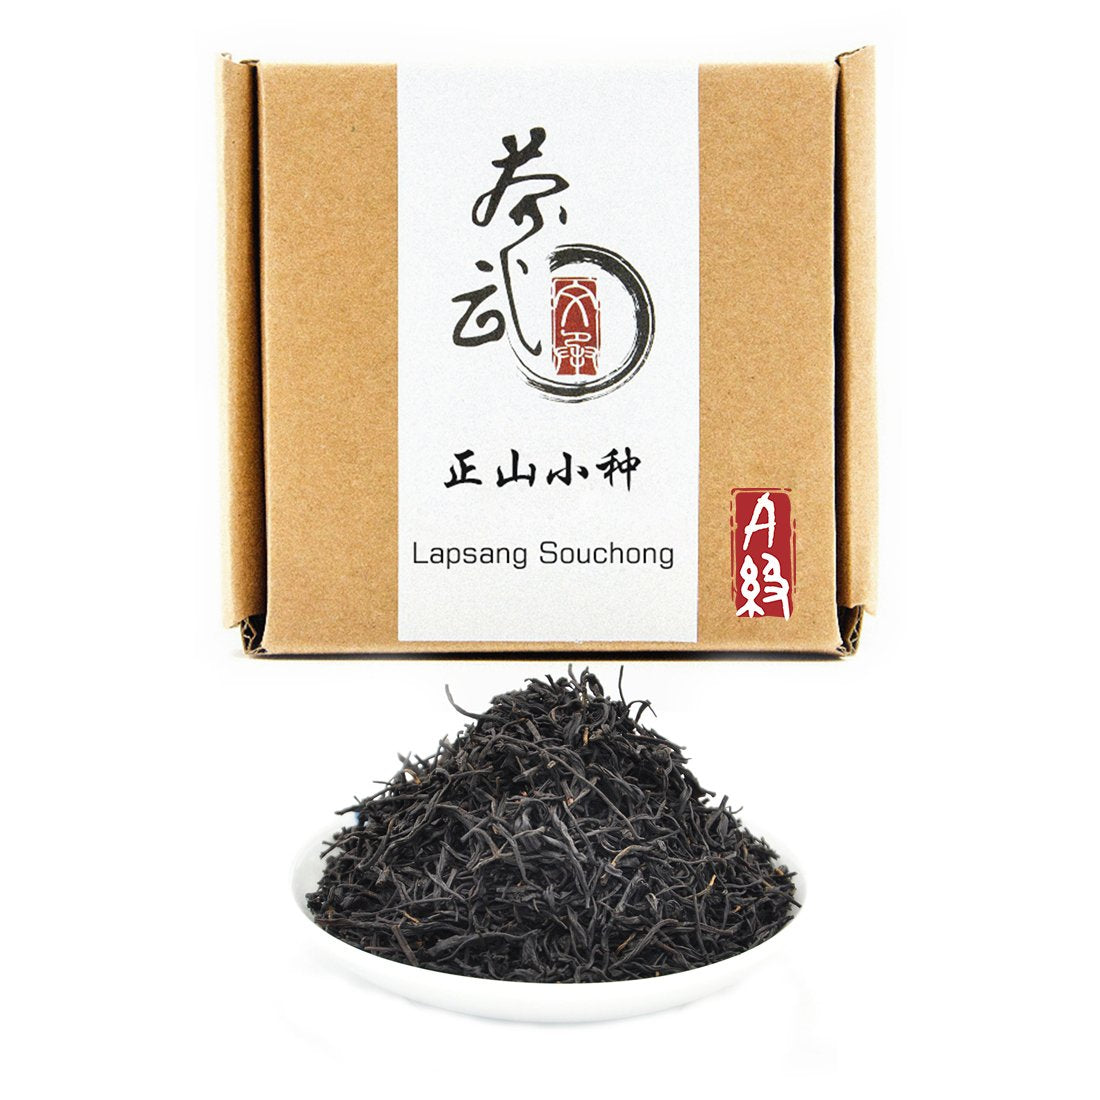 Cha Wu-[A] Lapsang Souchong Black Tea Loose Lea ,No Smokey Taste,Loose Leaf Tea,Chinese KongFu Cha